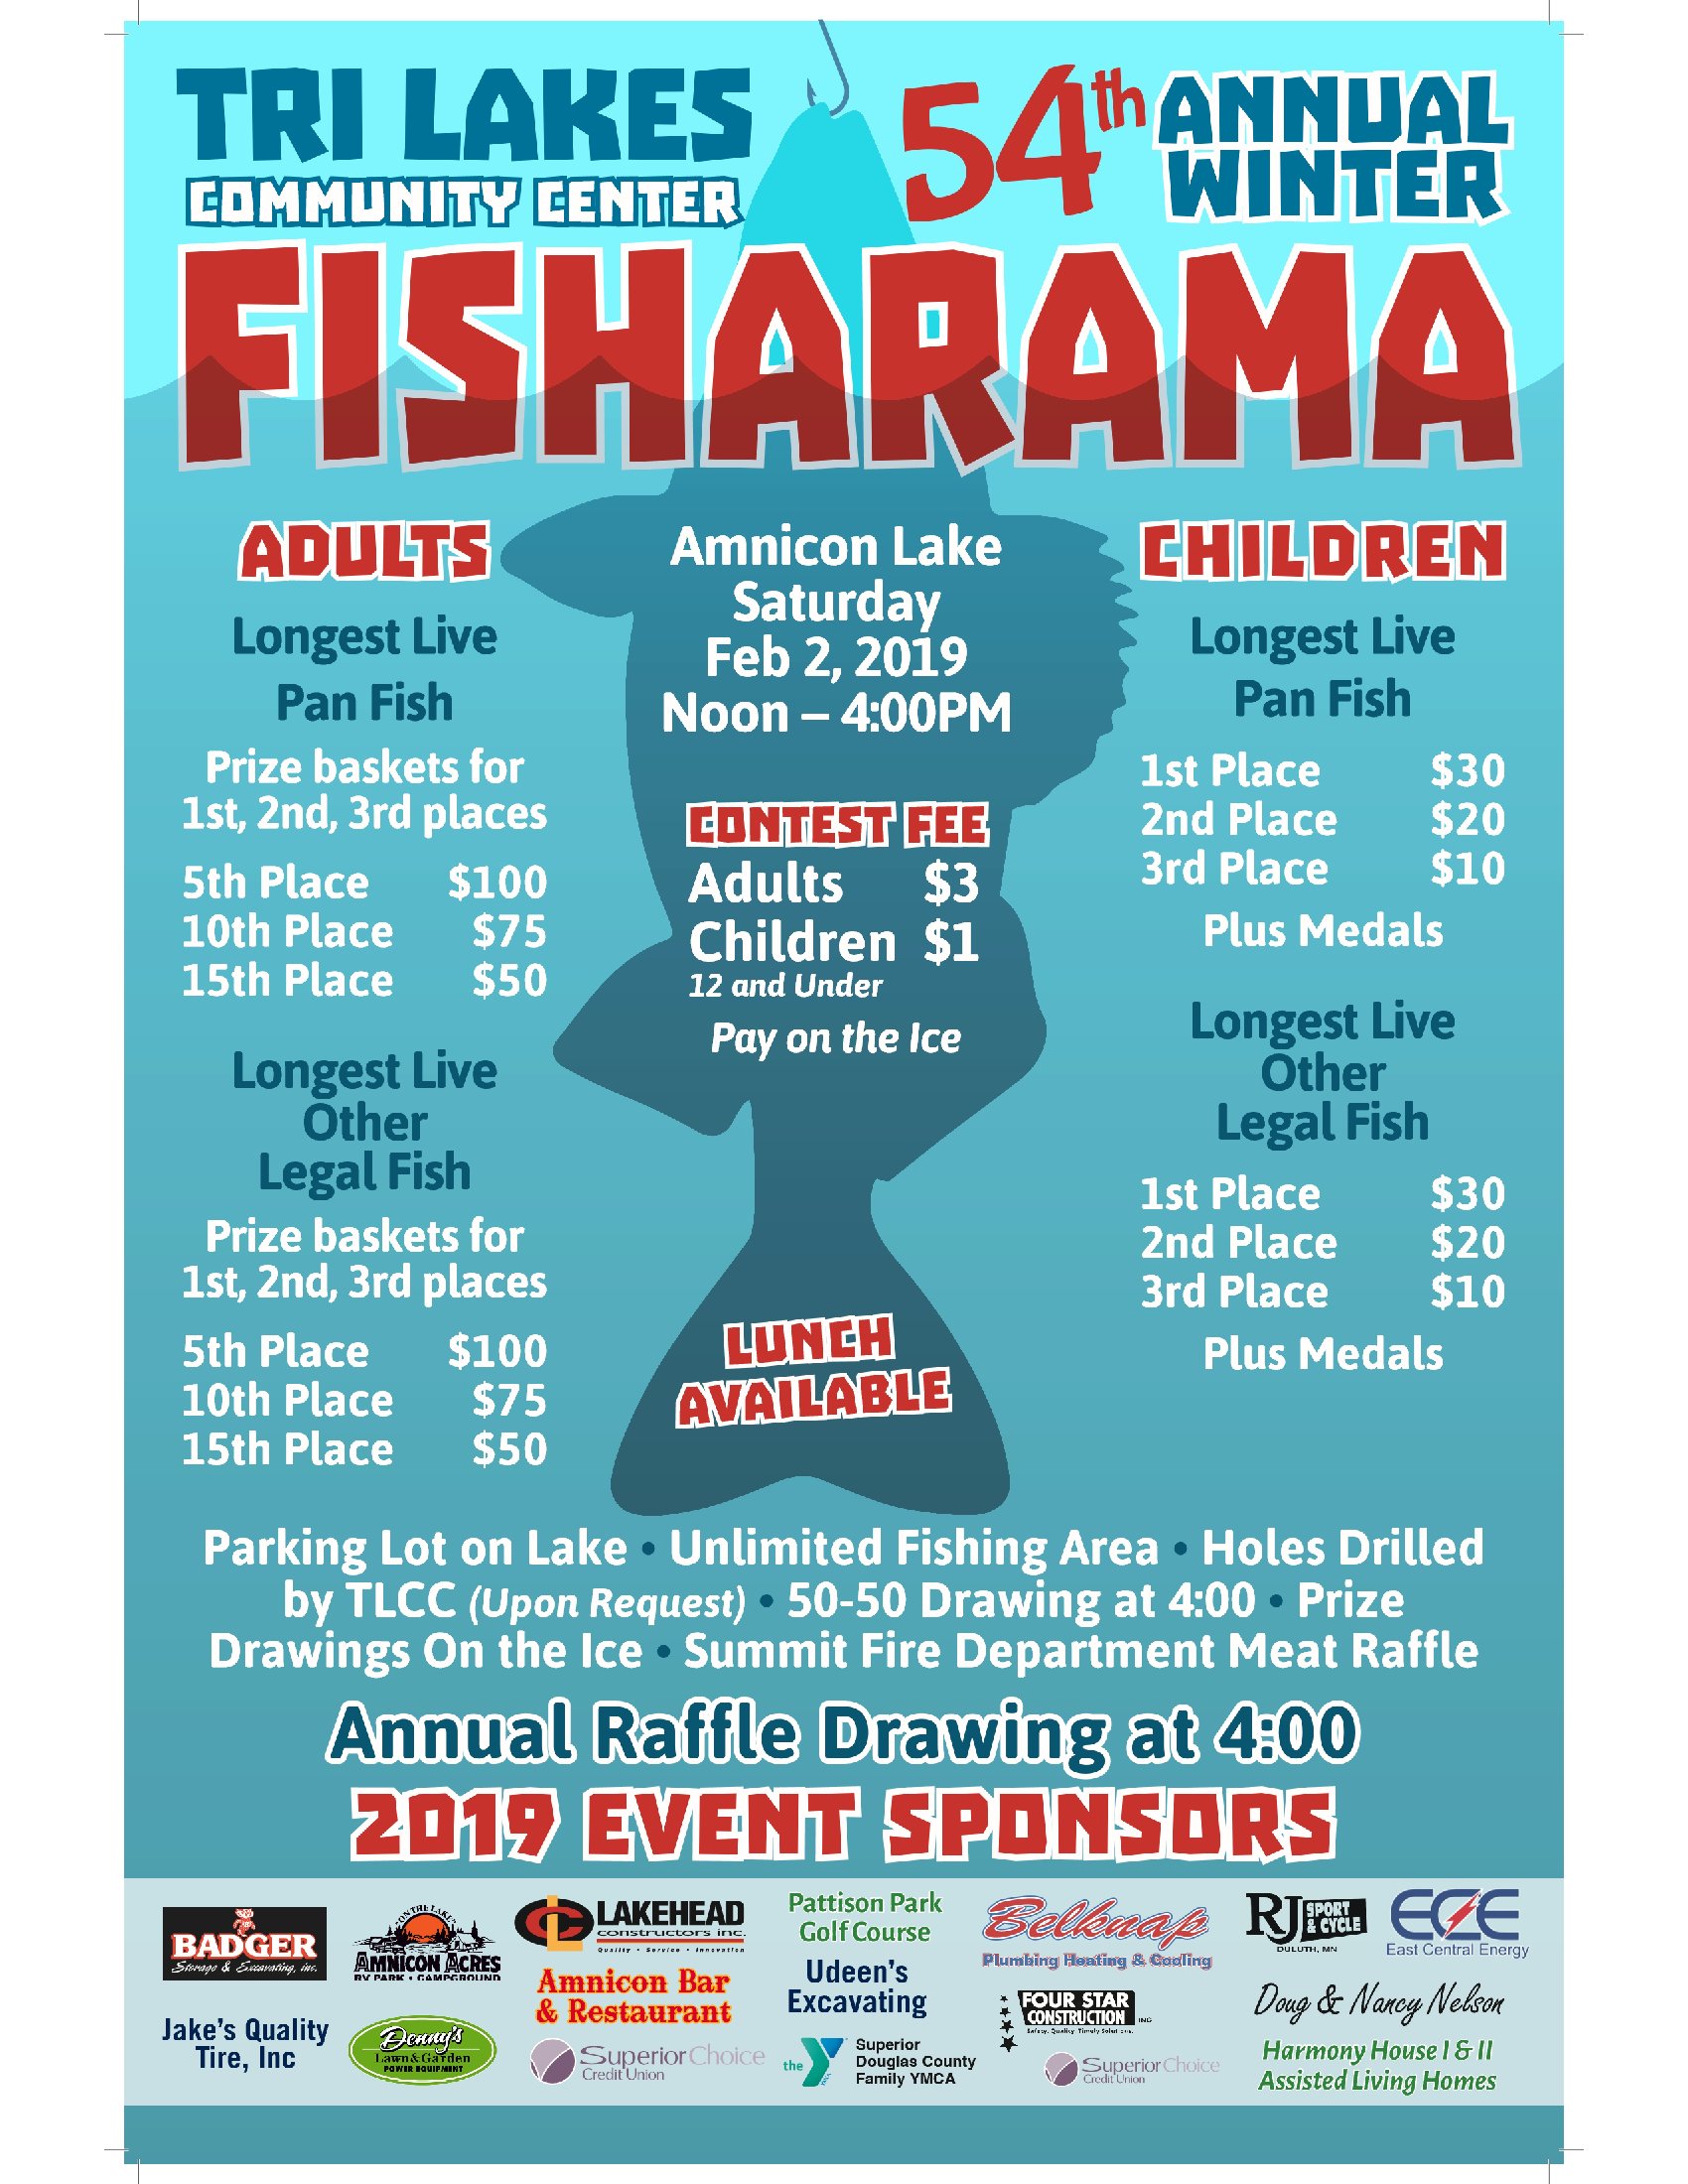 TLCC 54th Annual Fisharama Tri Lakes Community Center